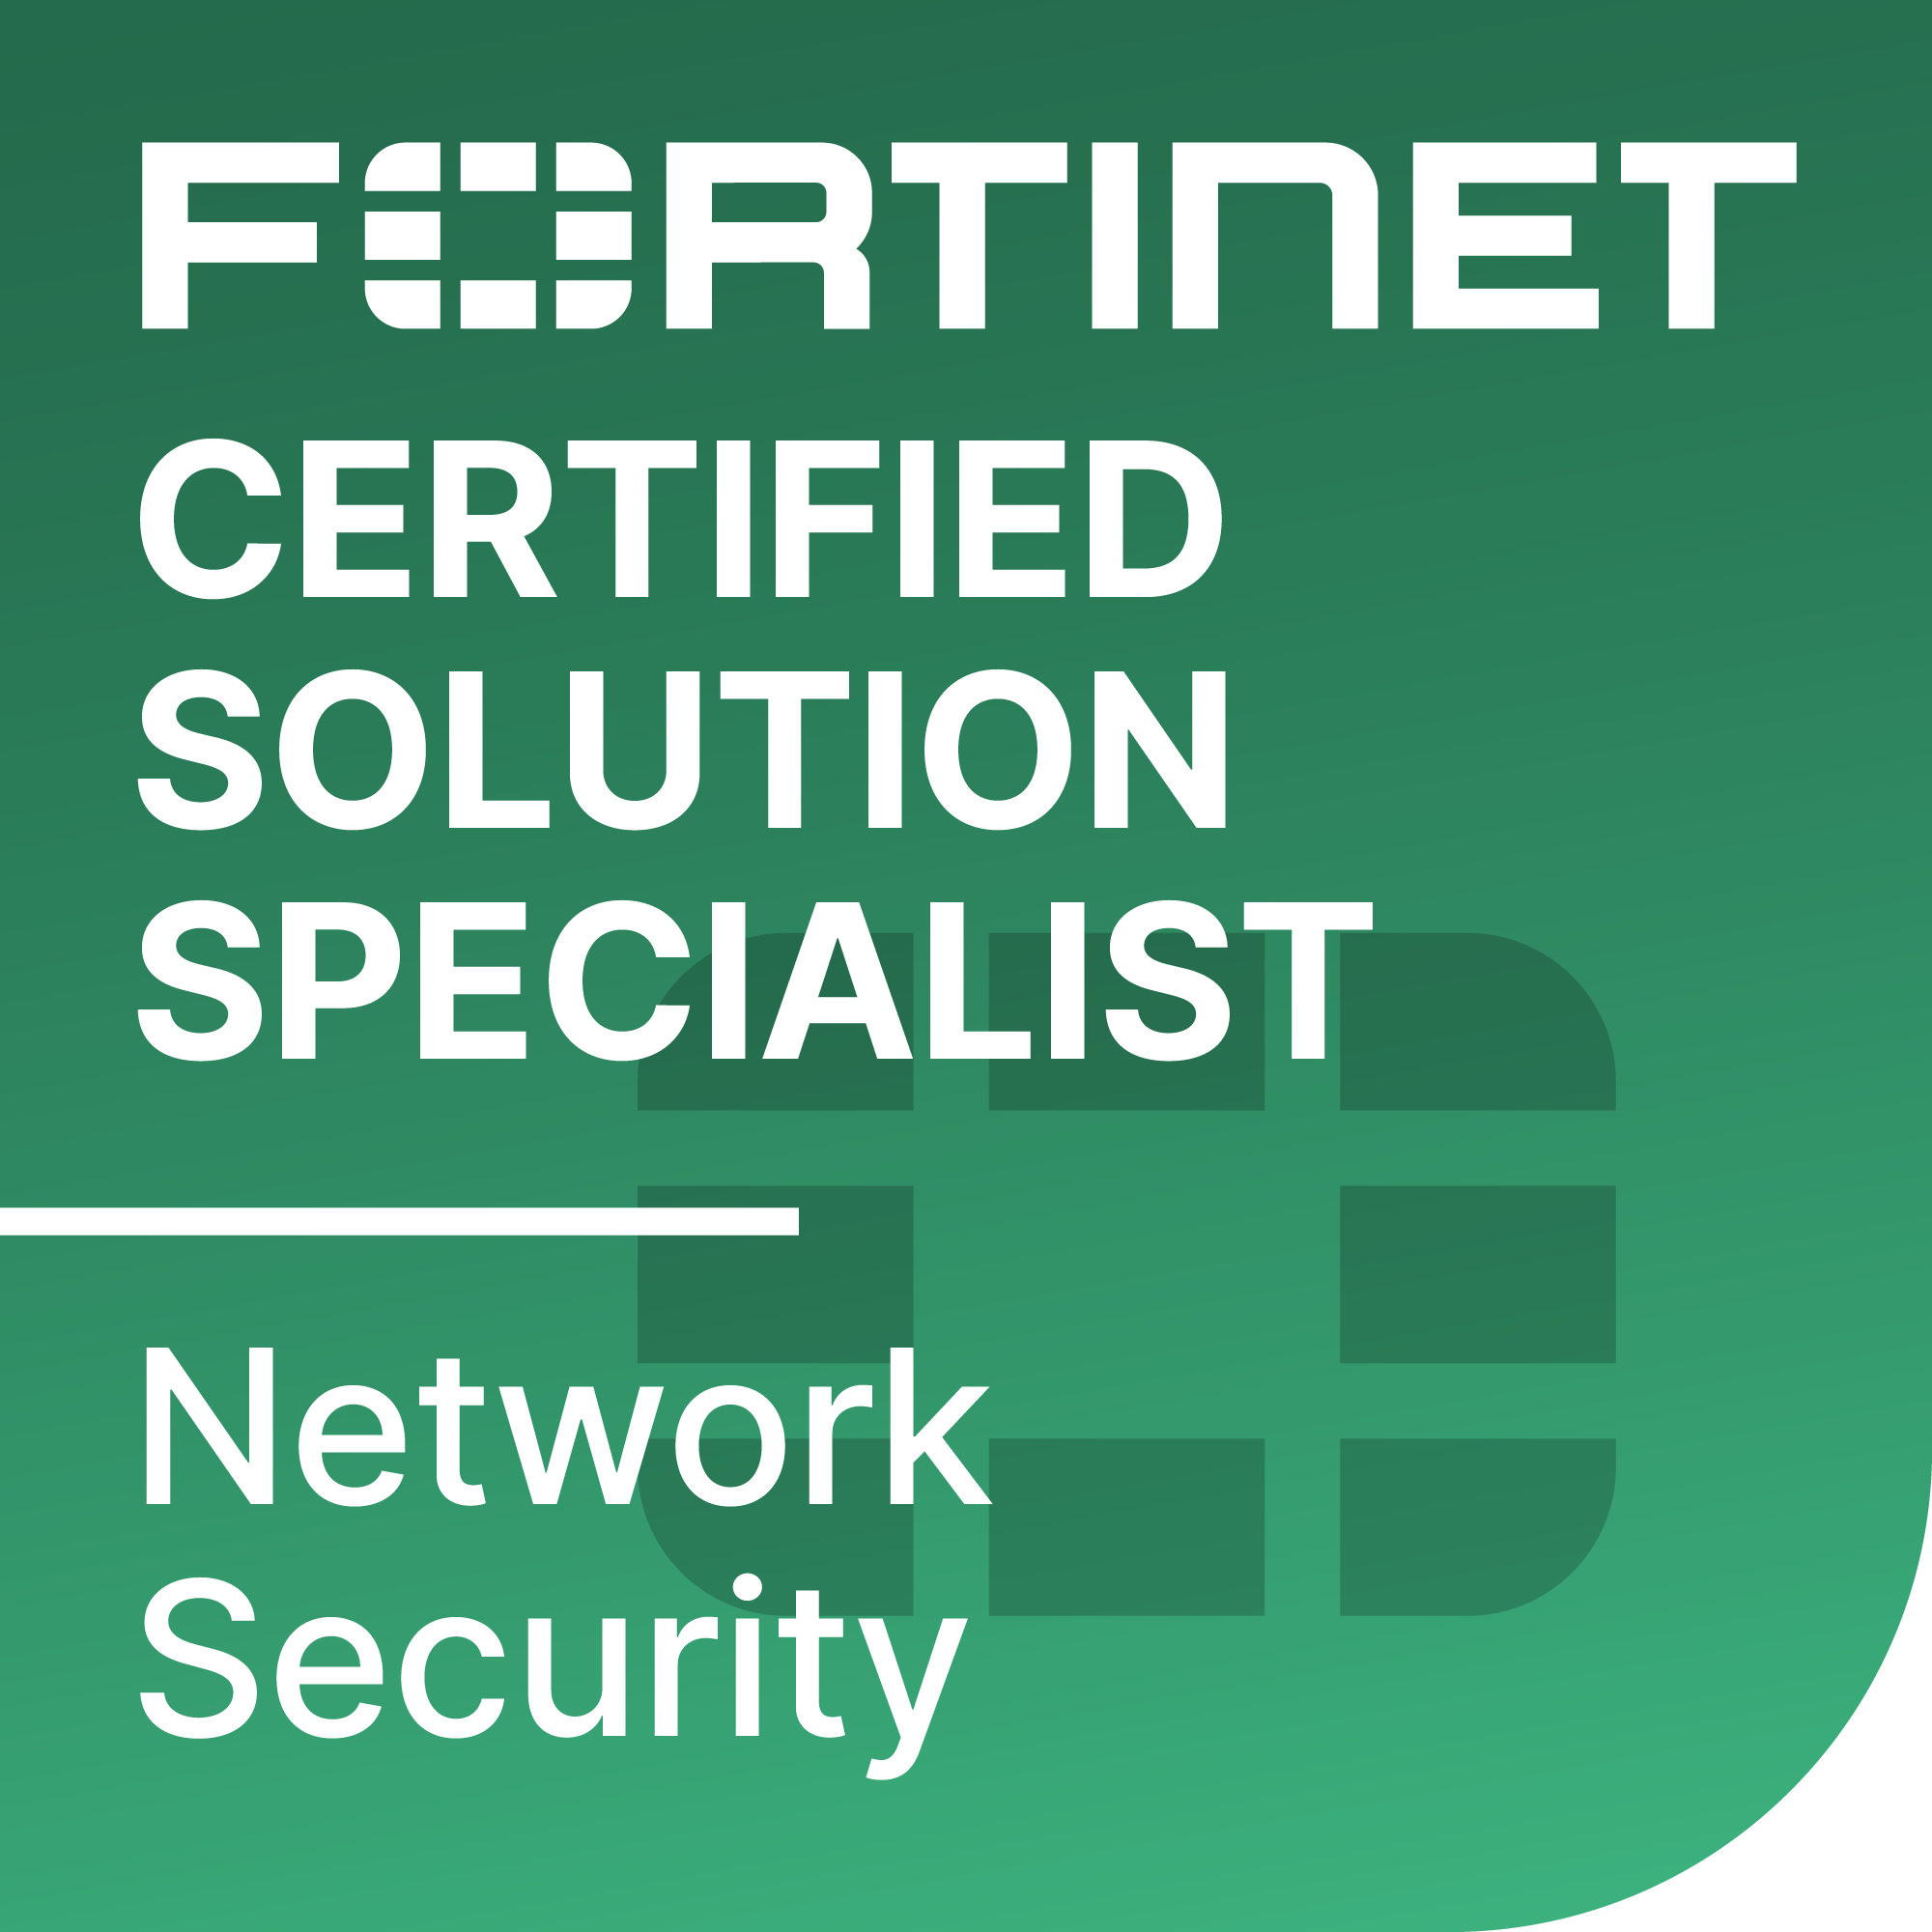 ftnt nse cert sol spec network security